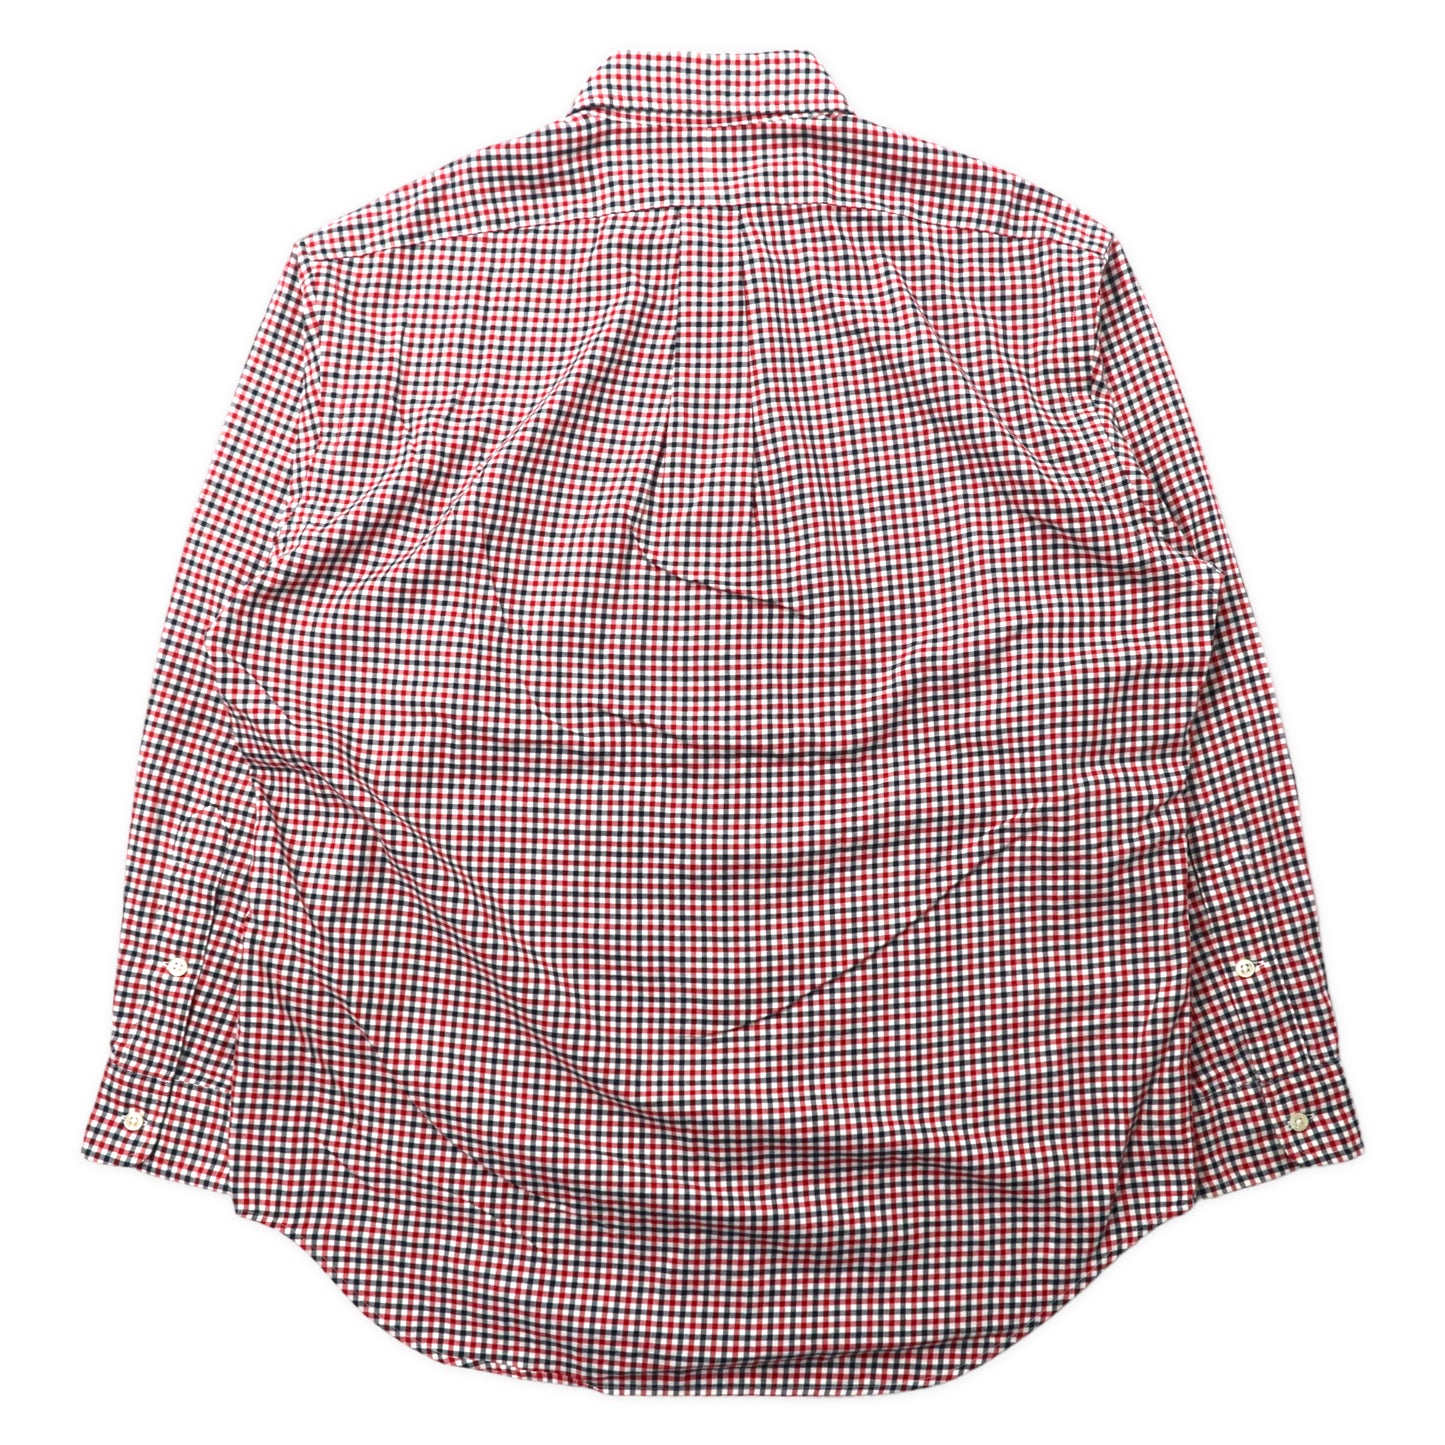 Ralph Lauren ボタンダウンシャツ L レッド ギンガムチェック コットン BLAKE スモールポニー刺繍